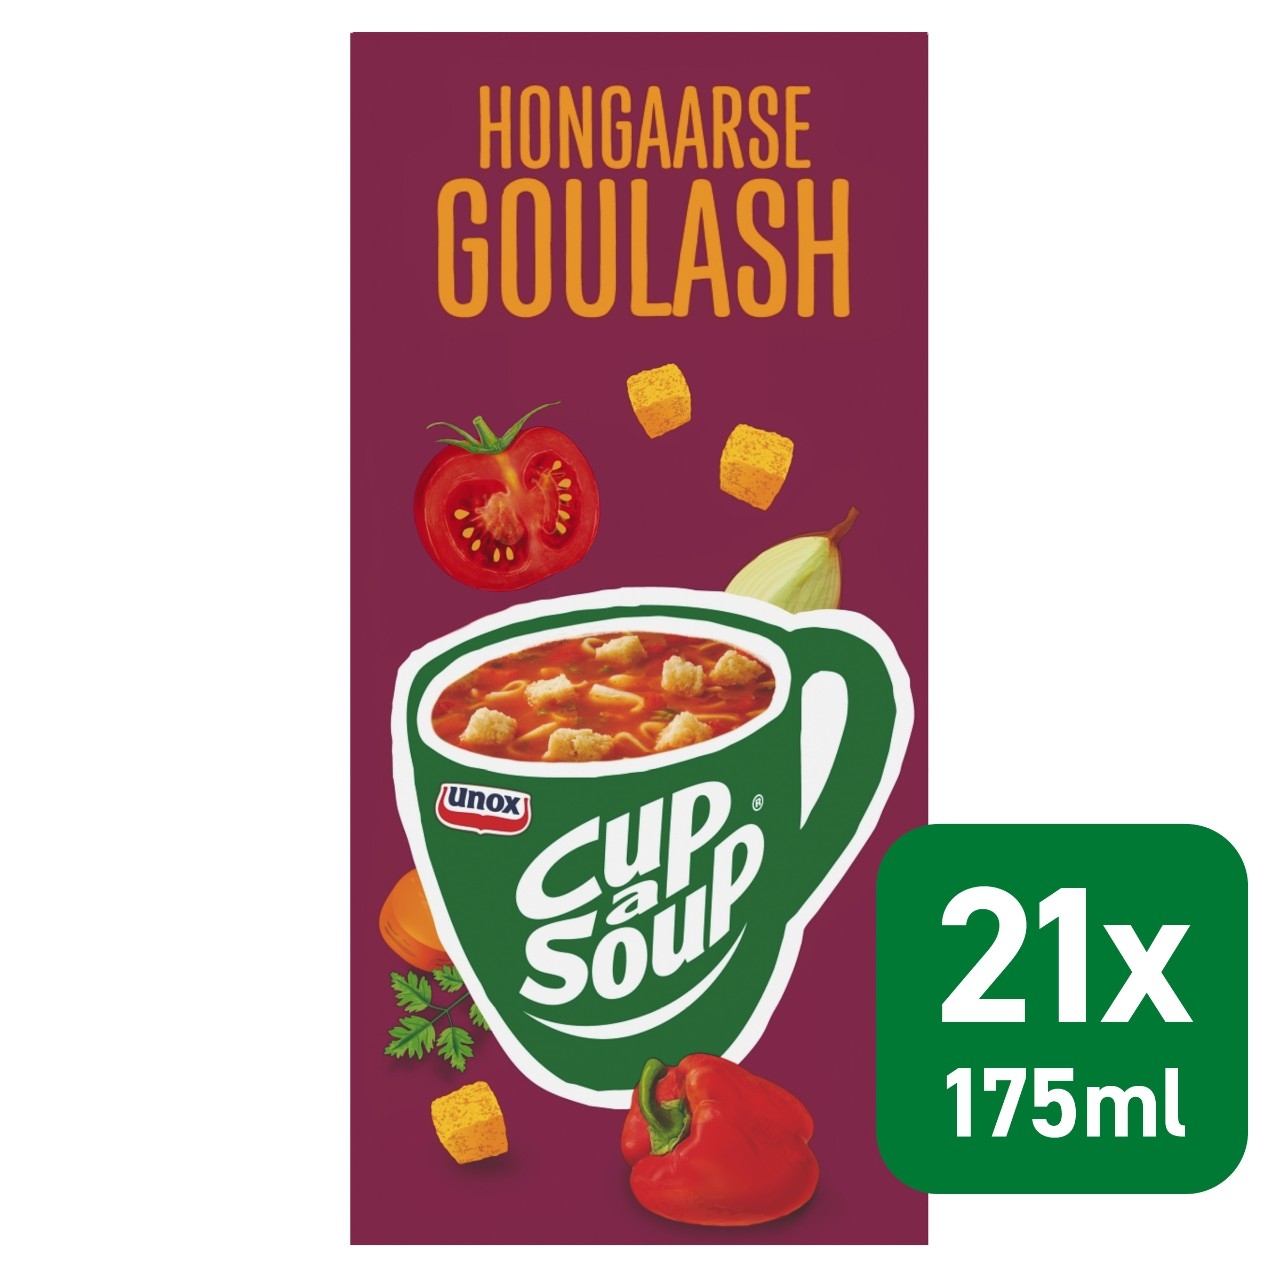 Cup a soup Hongaarse goulash 21 zakjes